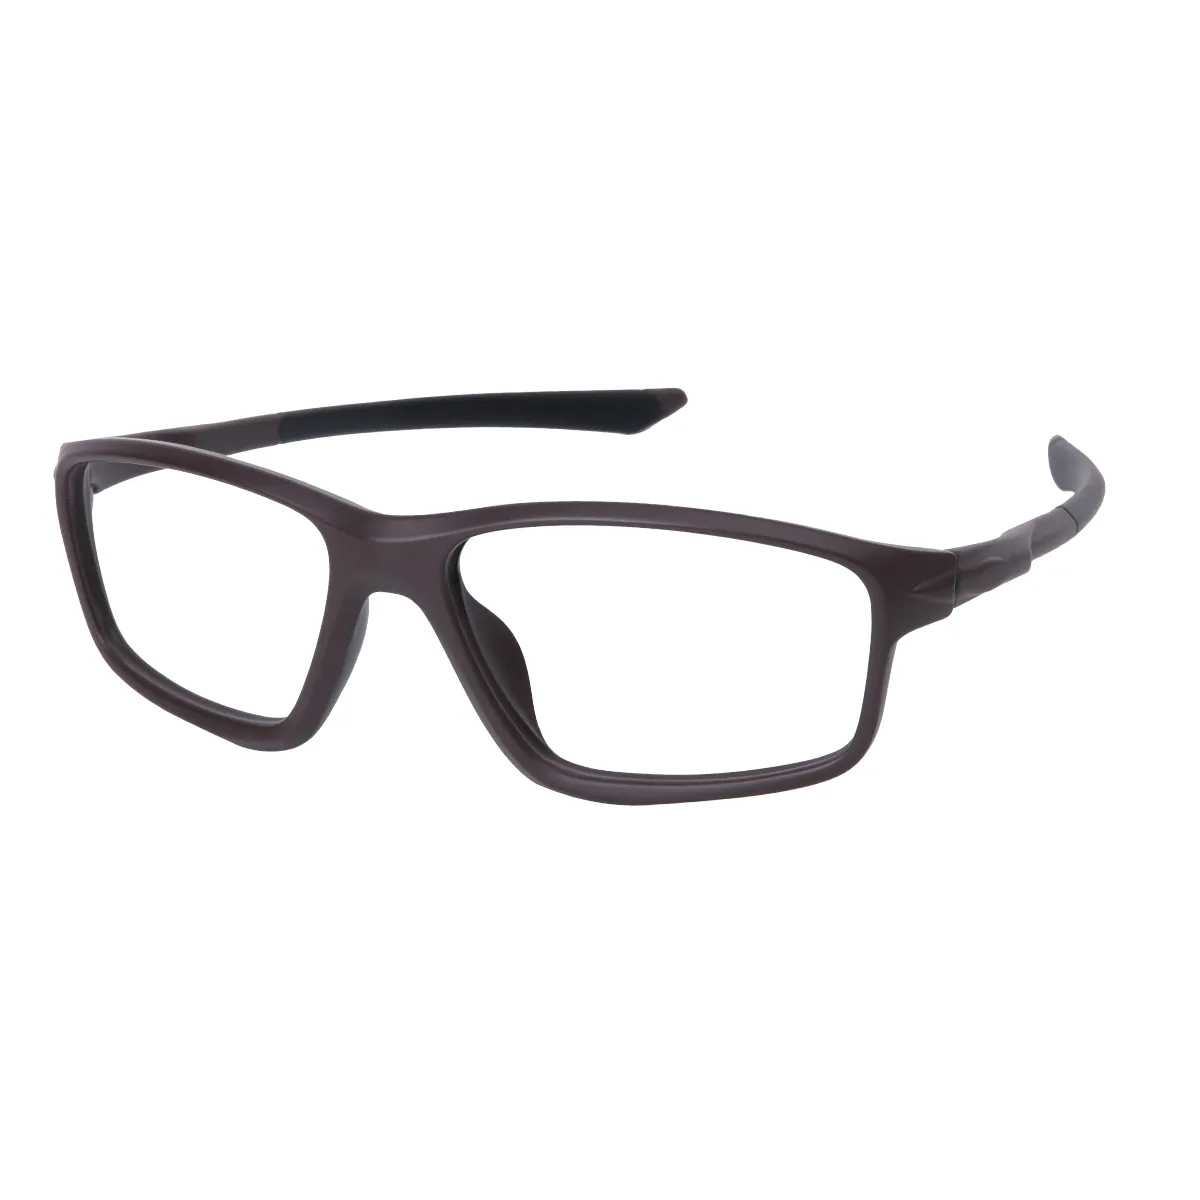 Reece - Rectangle Brown Glasses for Men